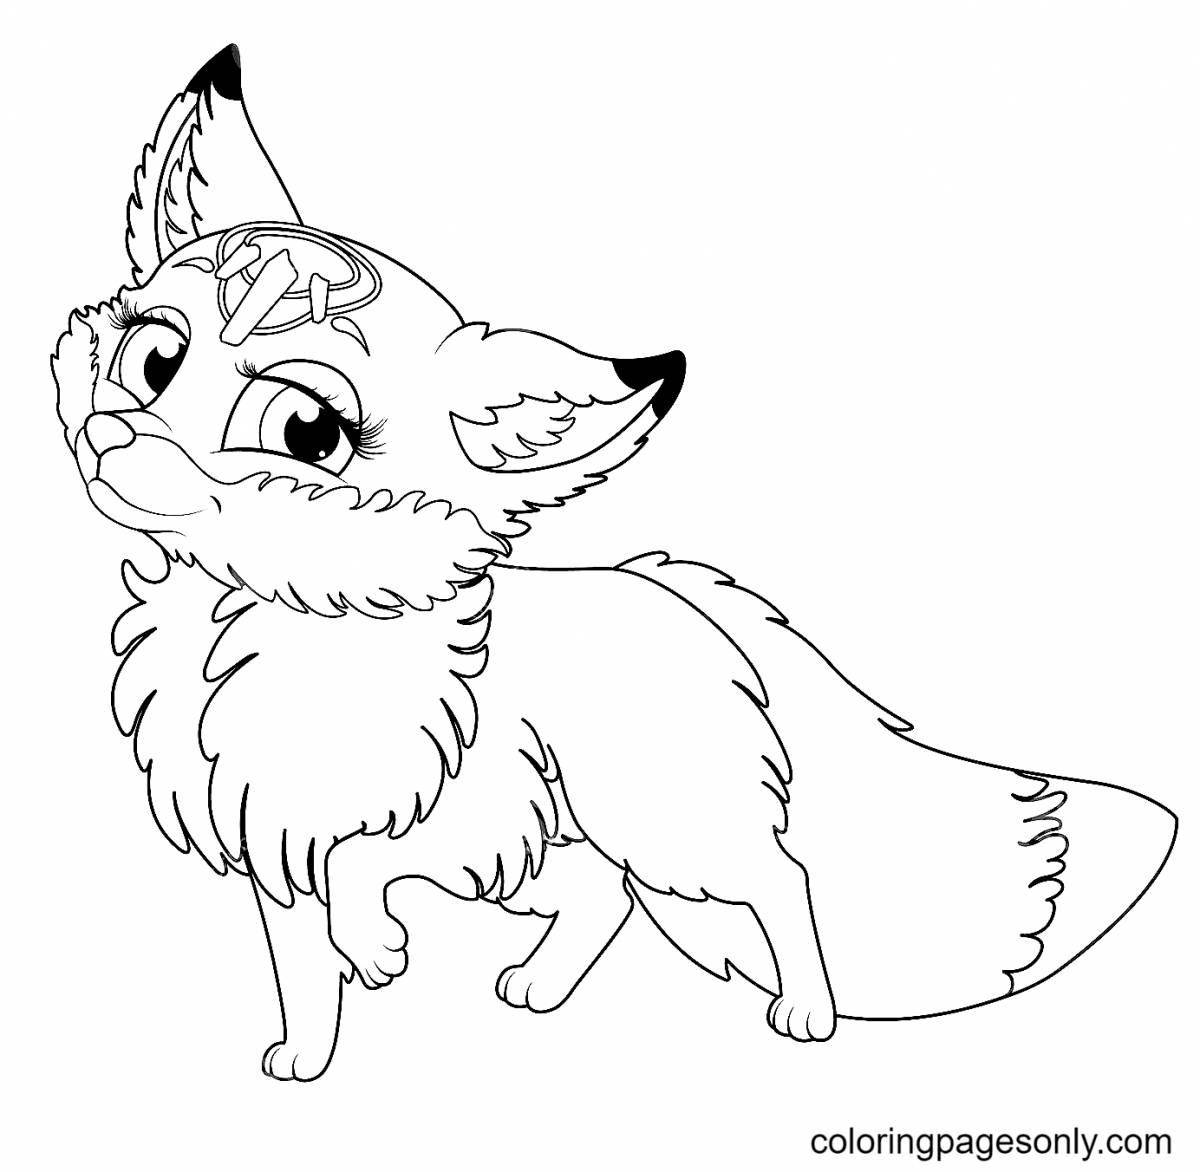 Elegant match fox coloring